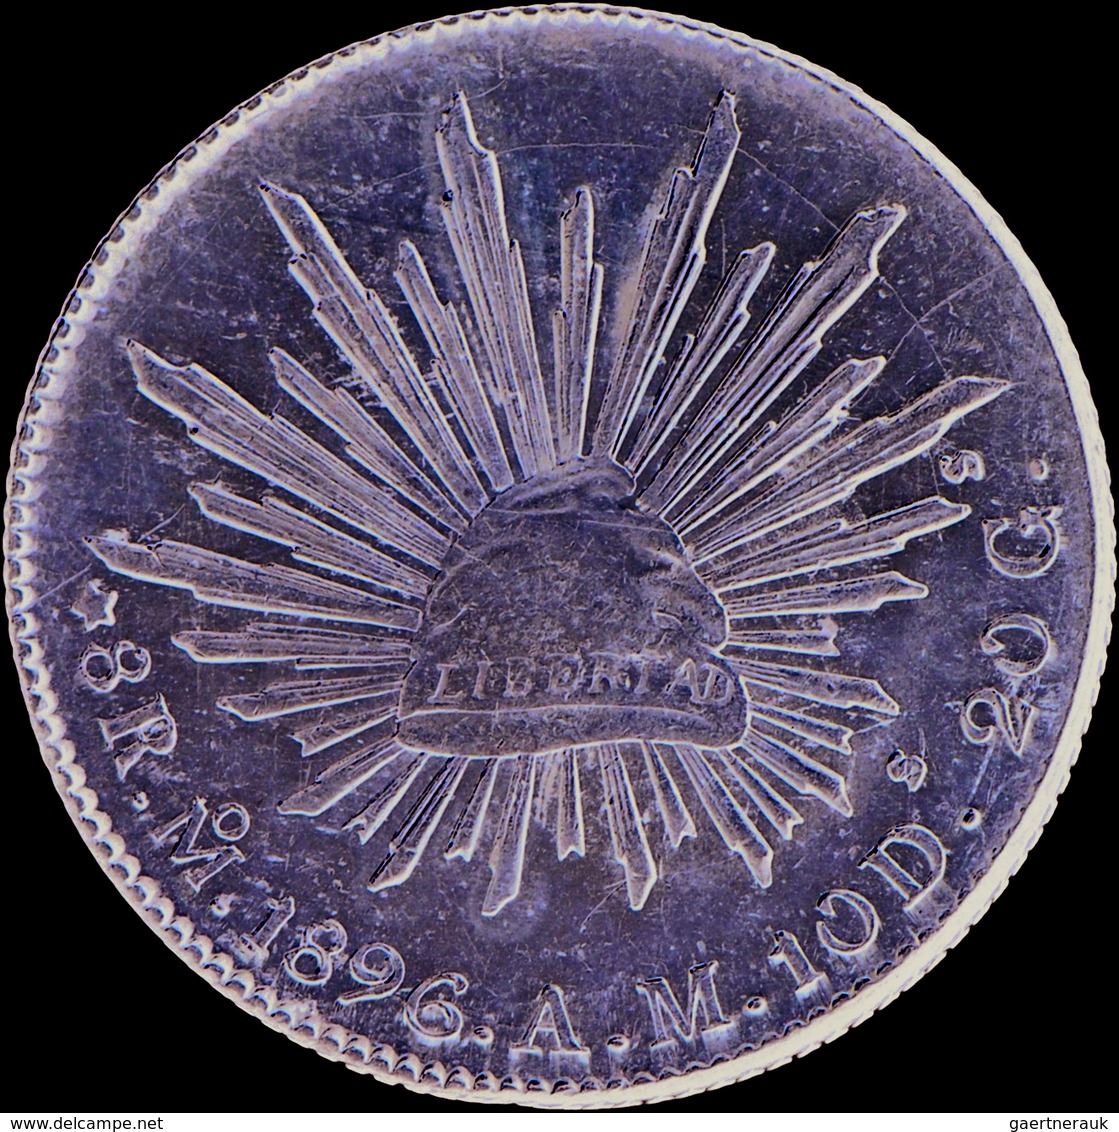 Mexiko: 8 Reales 1896 Mo - AM, Mexico City Mint, KM # 377.10, 27.08 G, Vorzüglich. - Messico